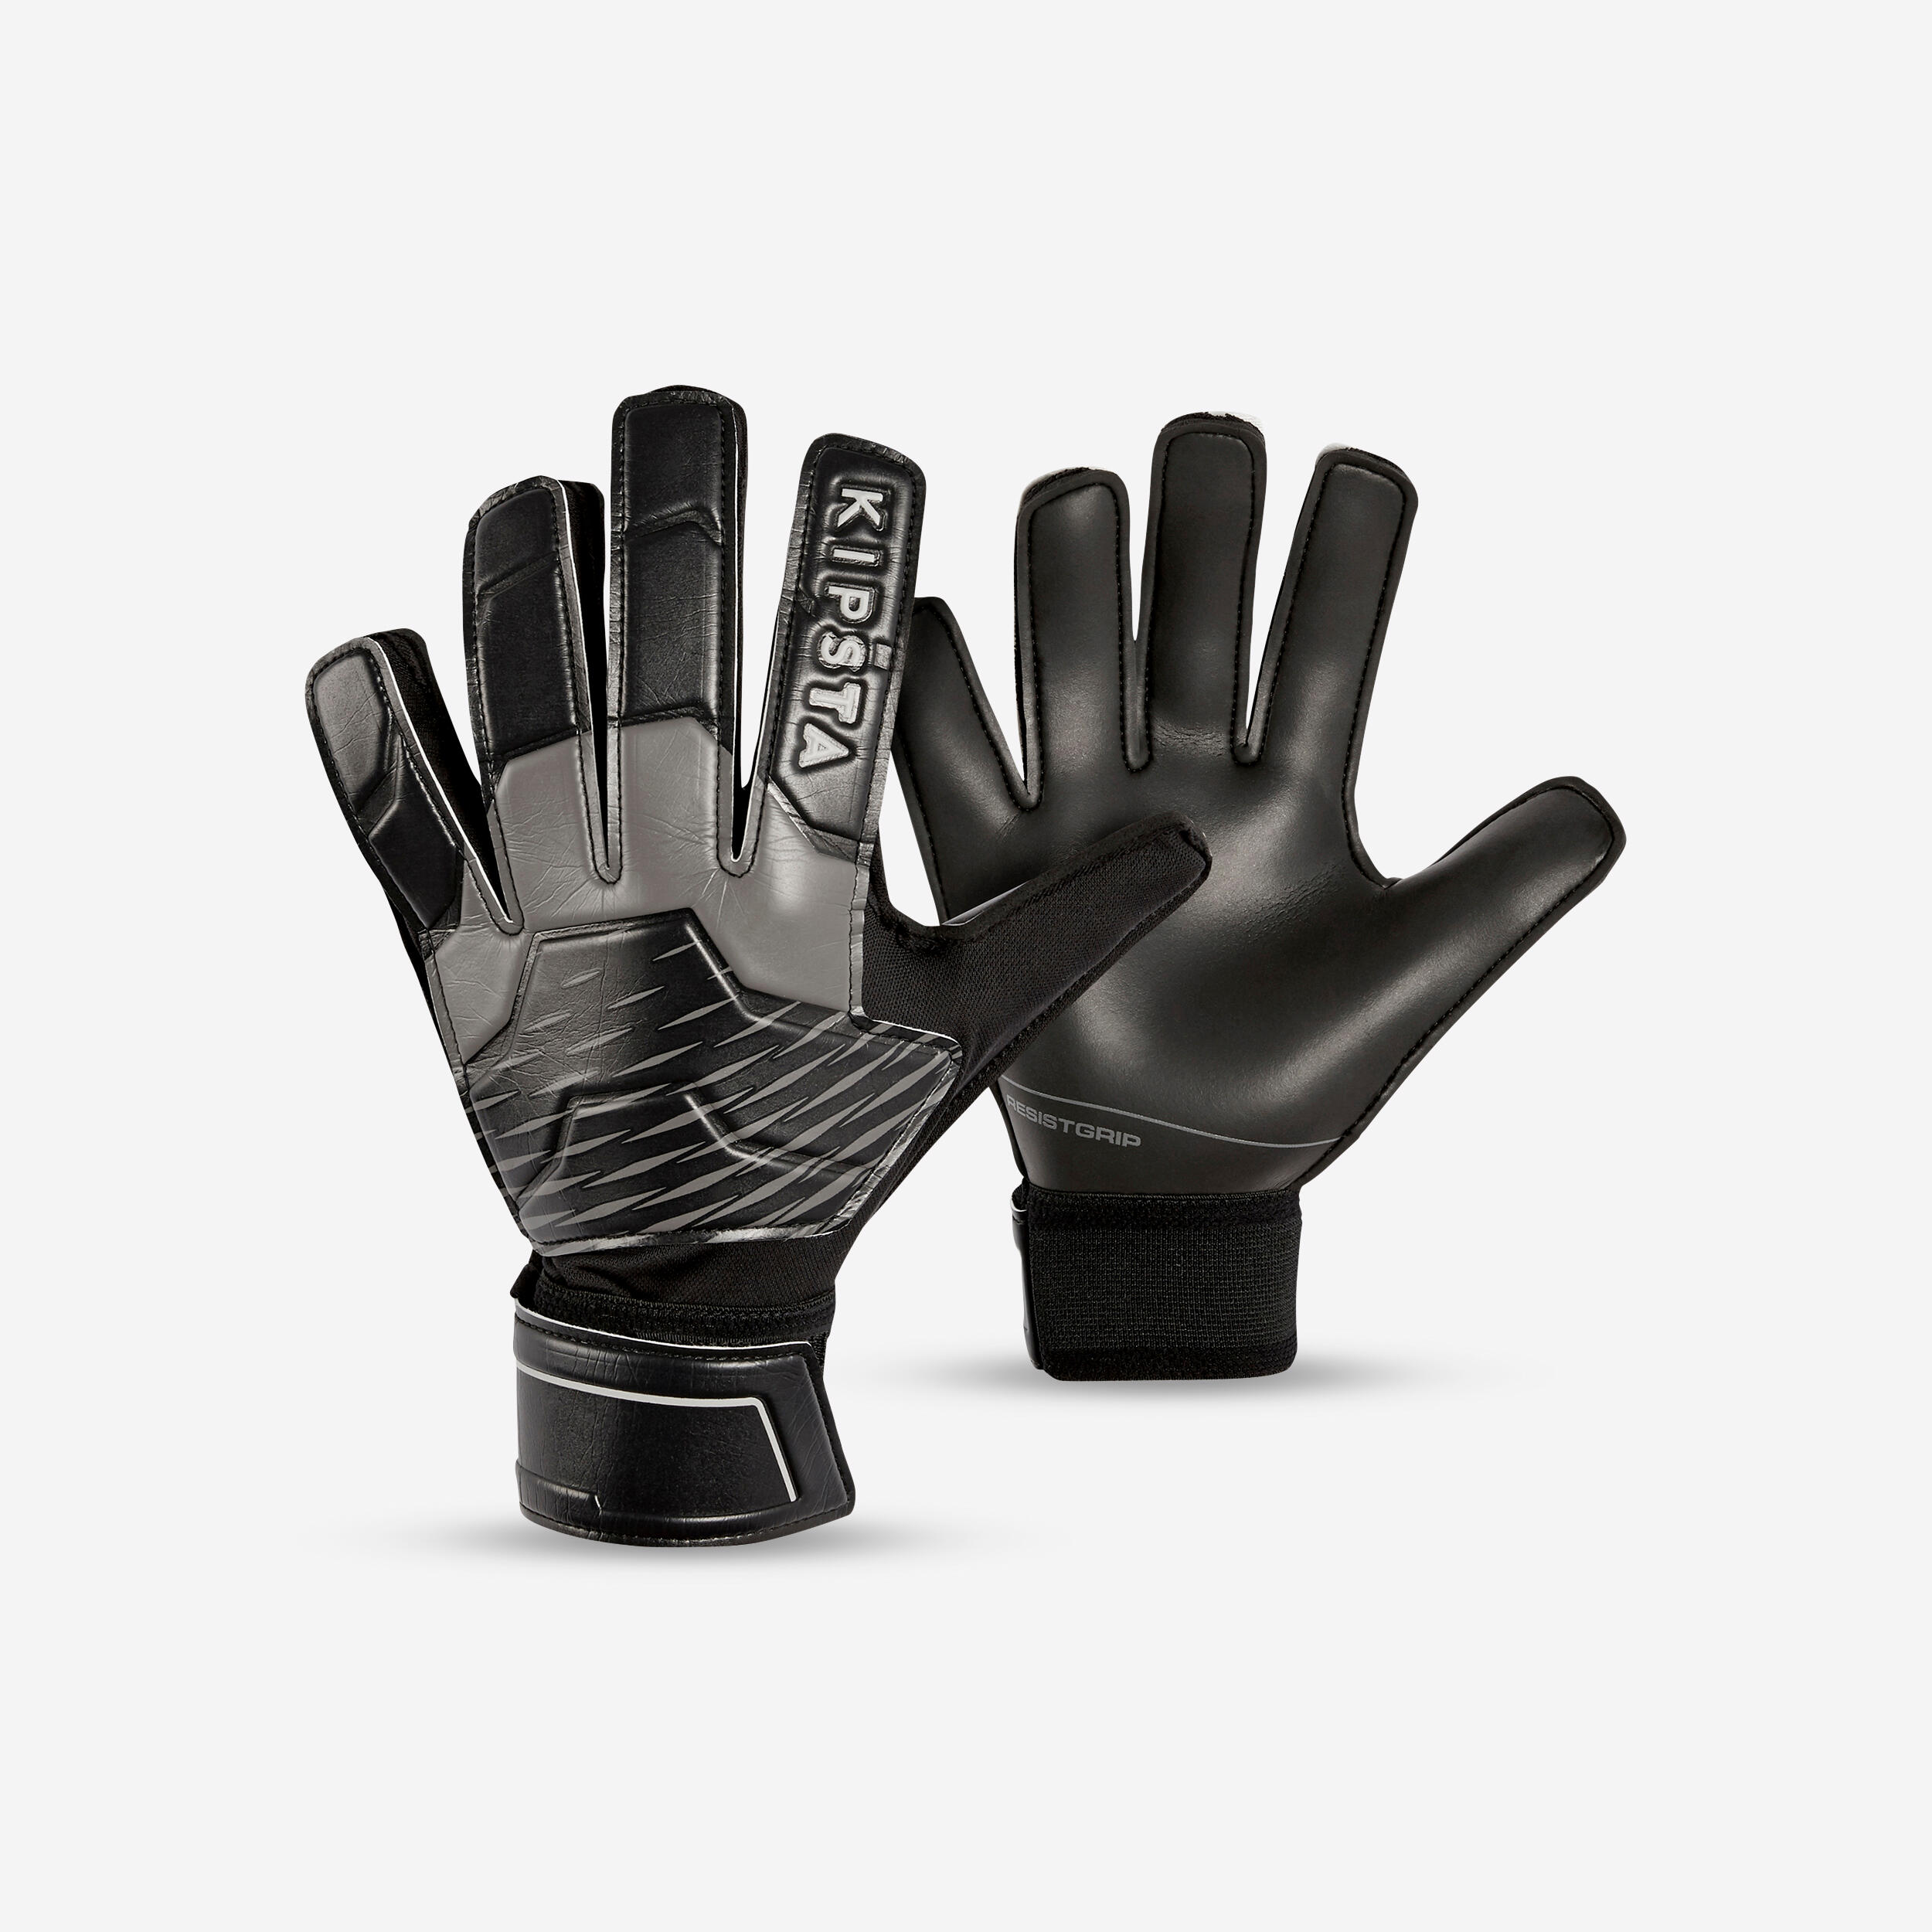 KIPSTA Adult Football Goalkeeper Gloves F100 Resist - Black/Grey